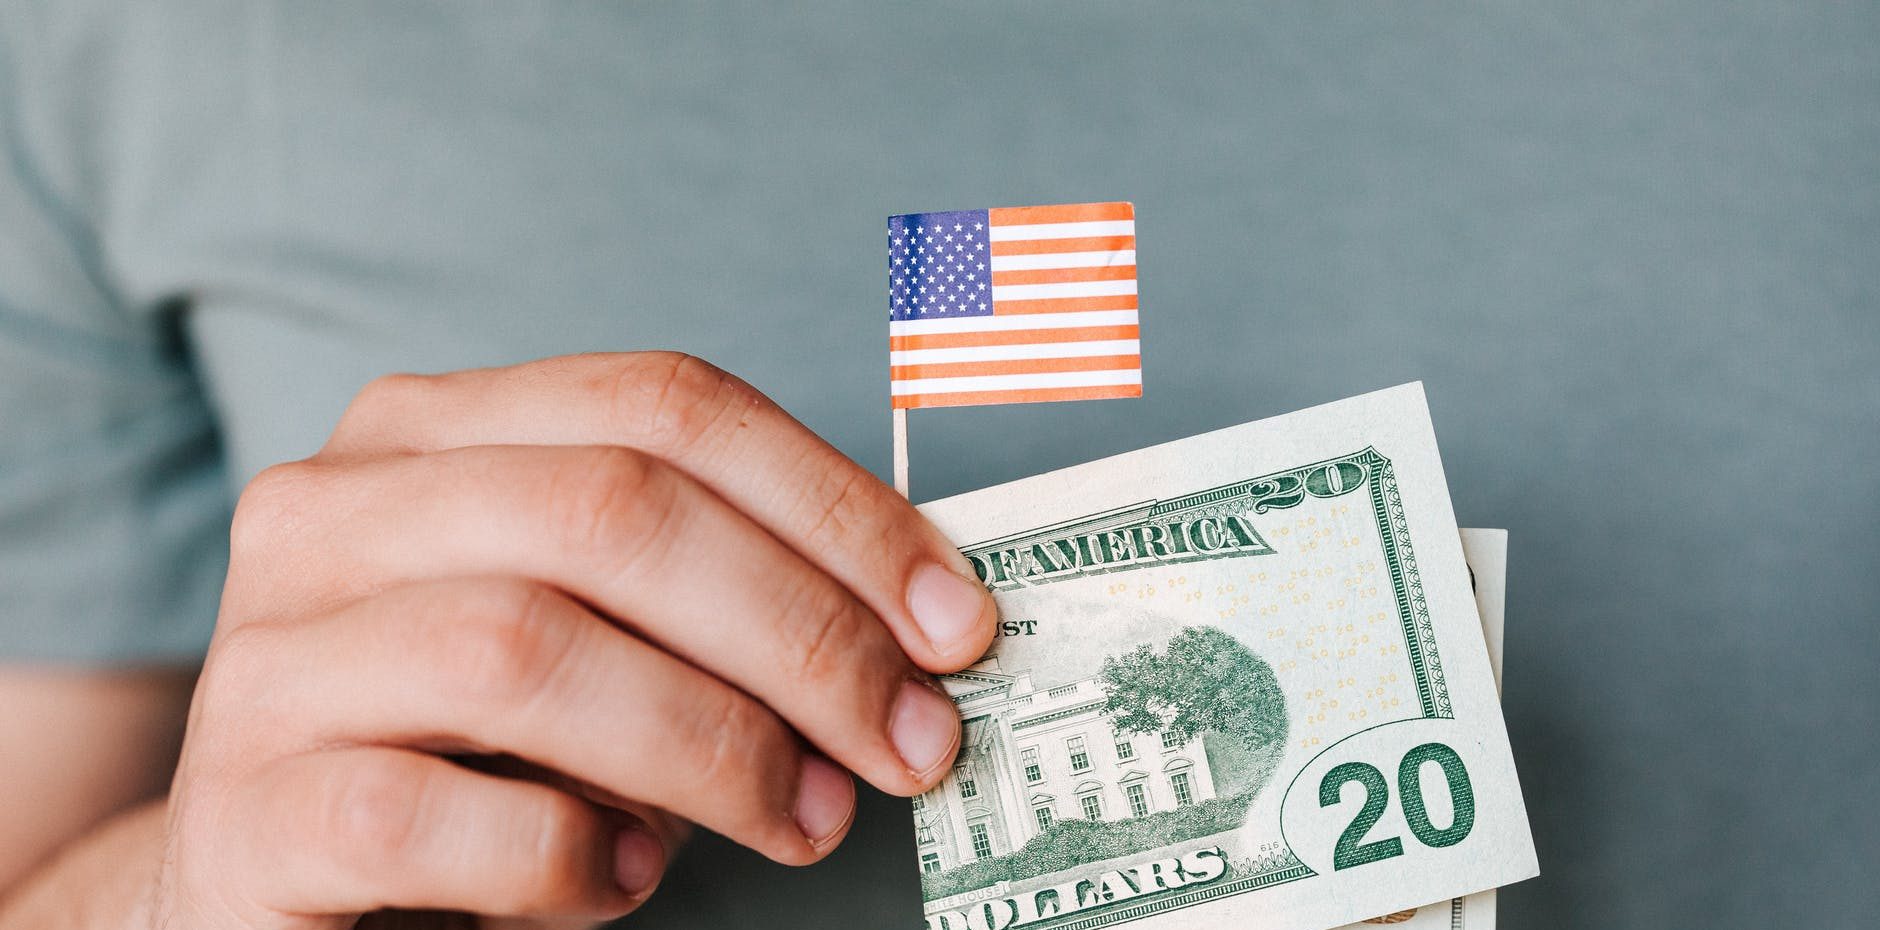 Holding cash and a tiny U.S. flag